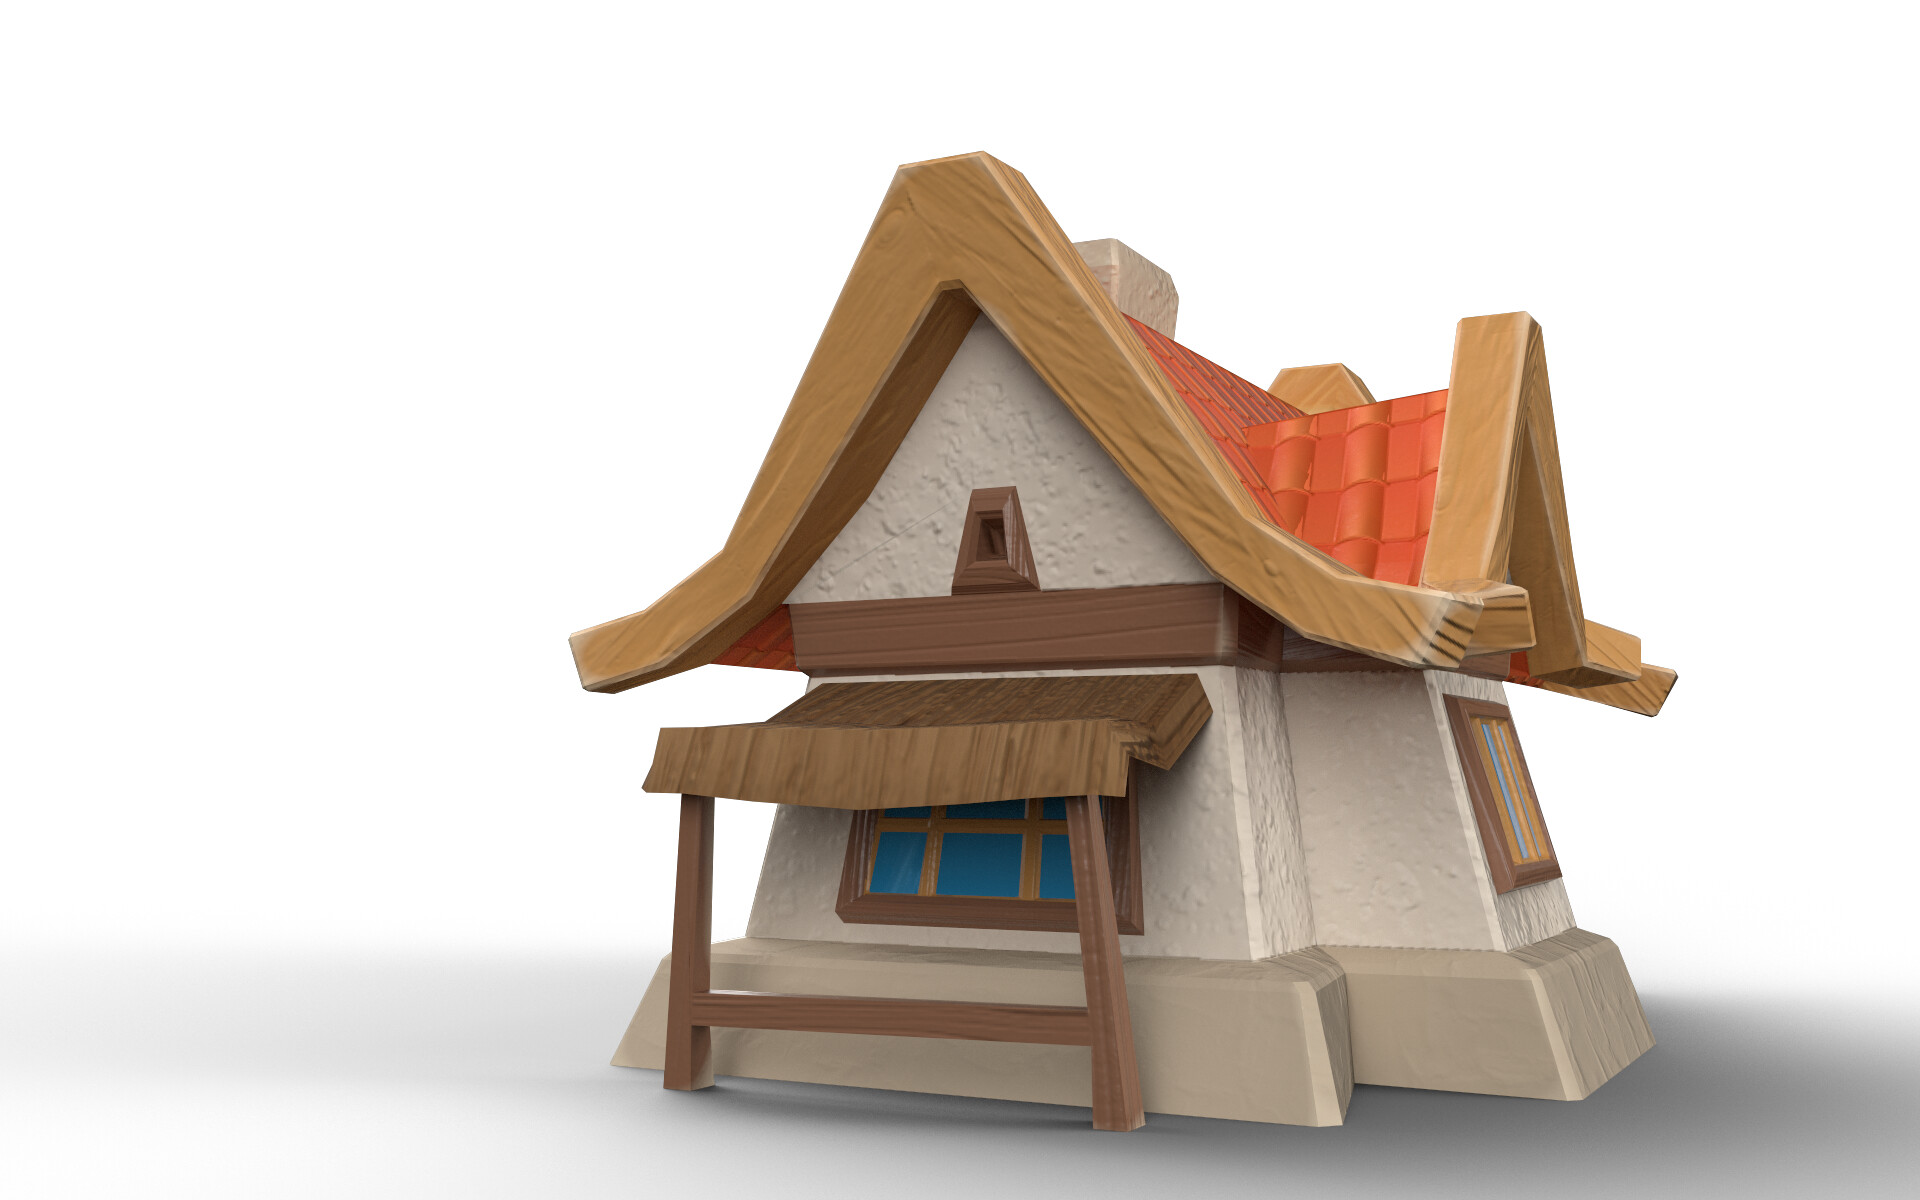 ArtStation - Stylized toy or cartoon small house